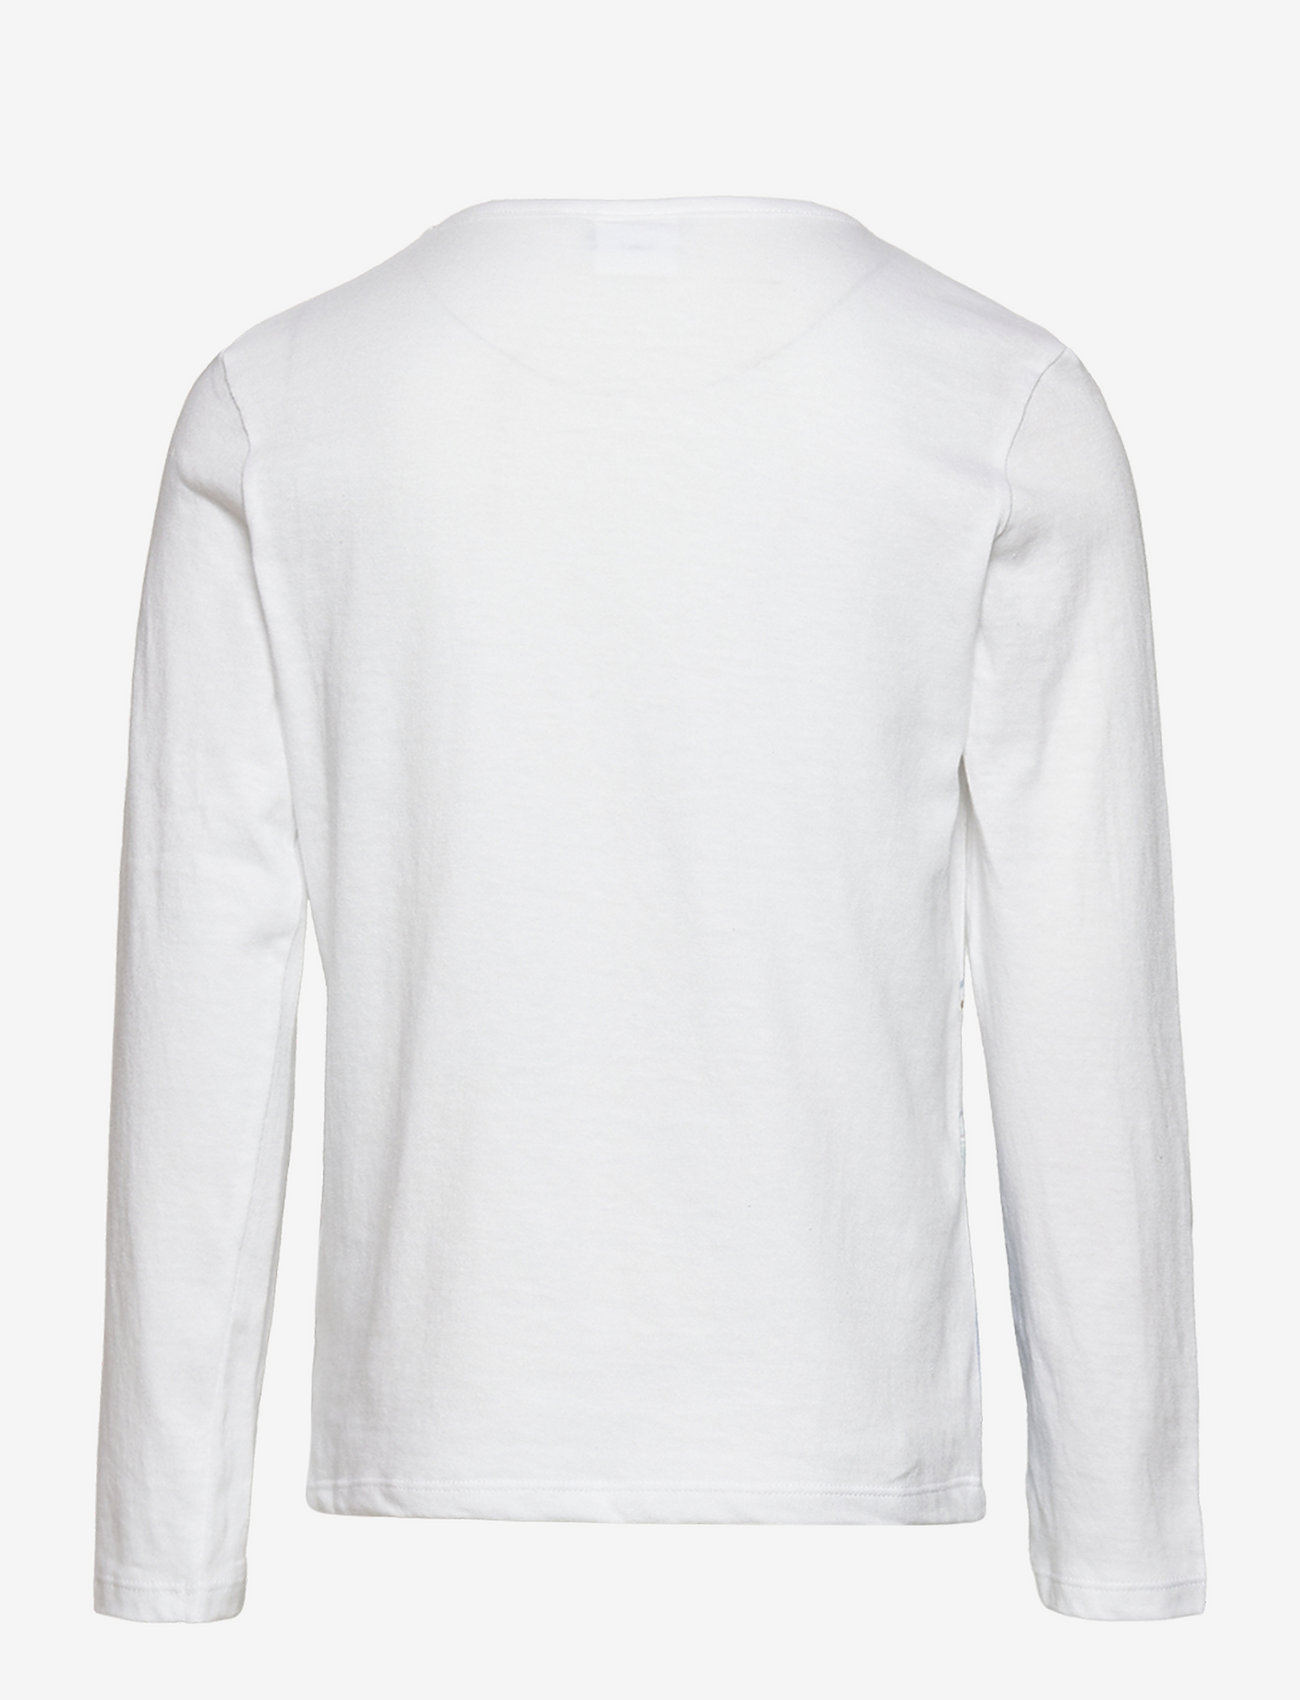 Ledus sirds - LONG-SLEEVED T-SHIRT - apdrukāts t-krekls ar garām piedurknēm - white - 1